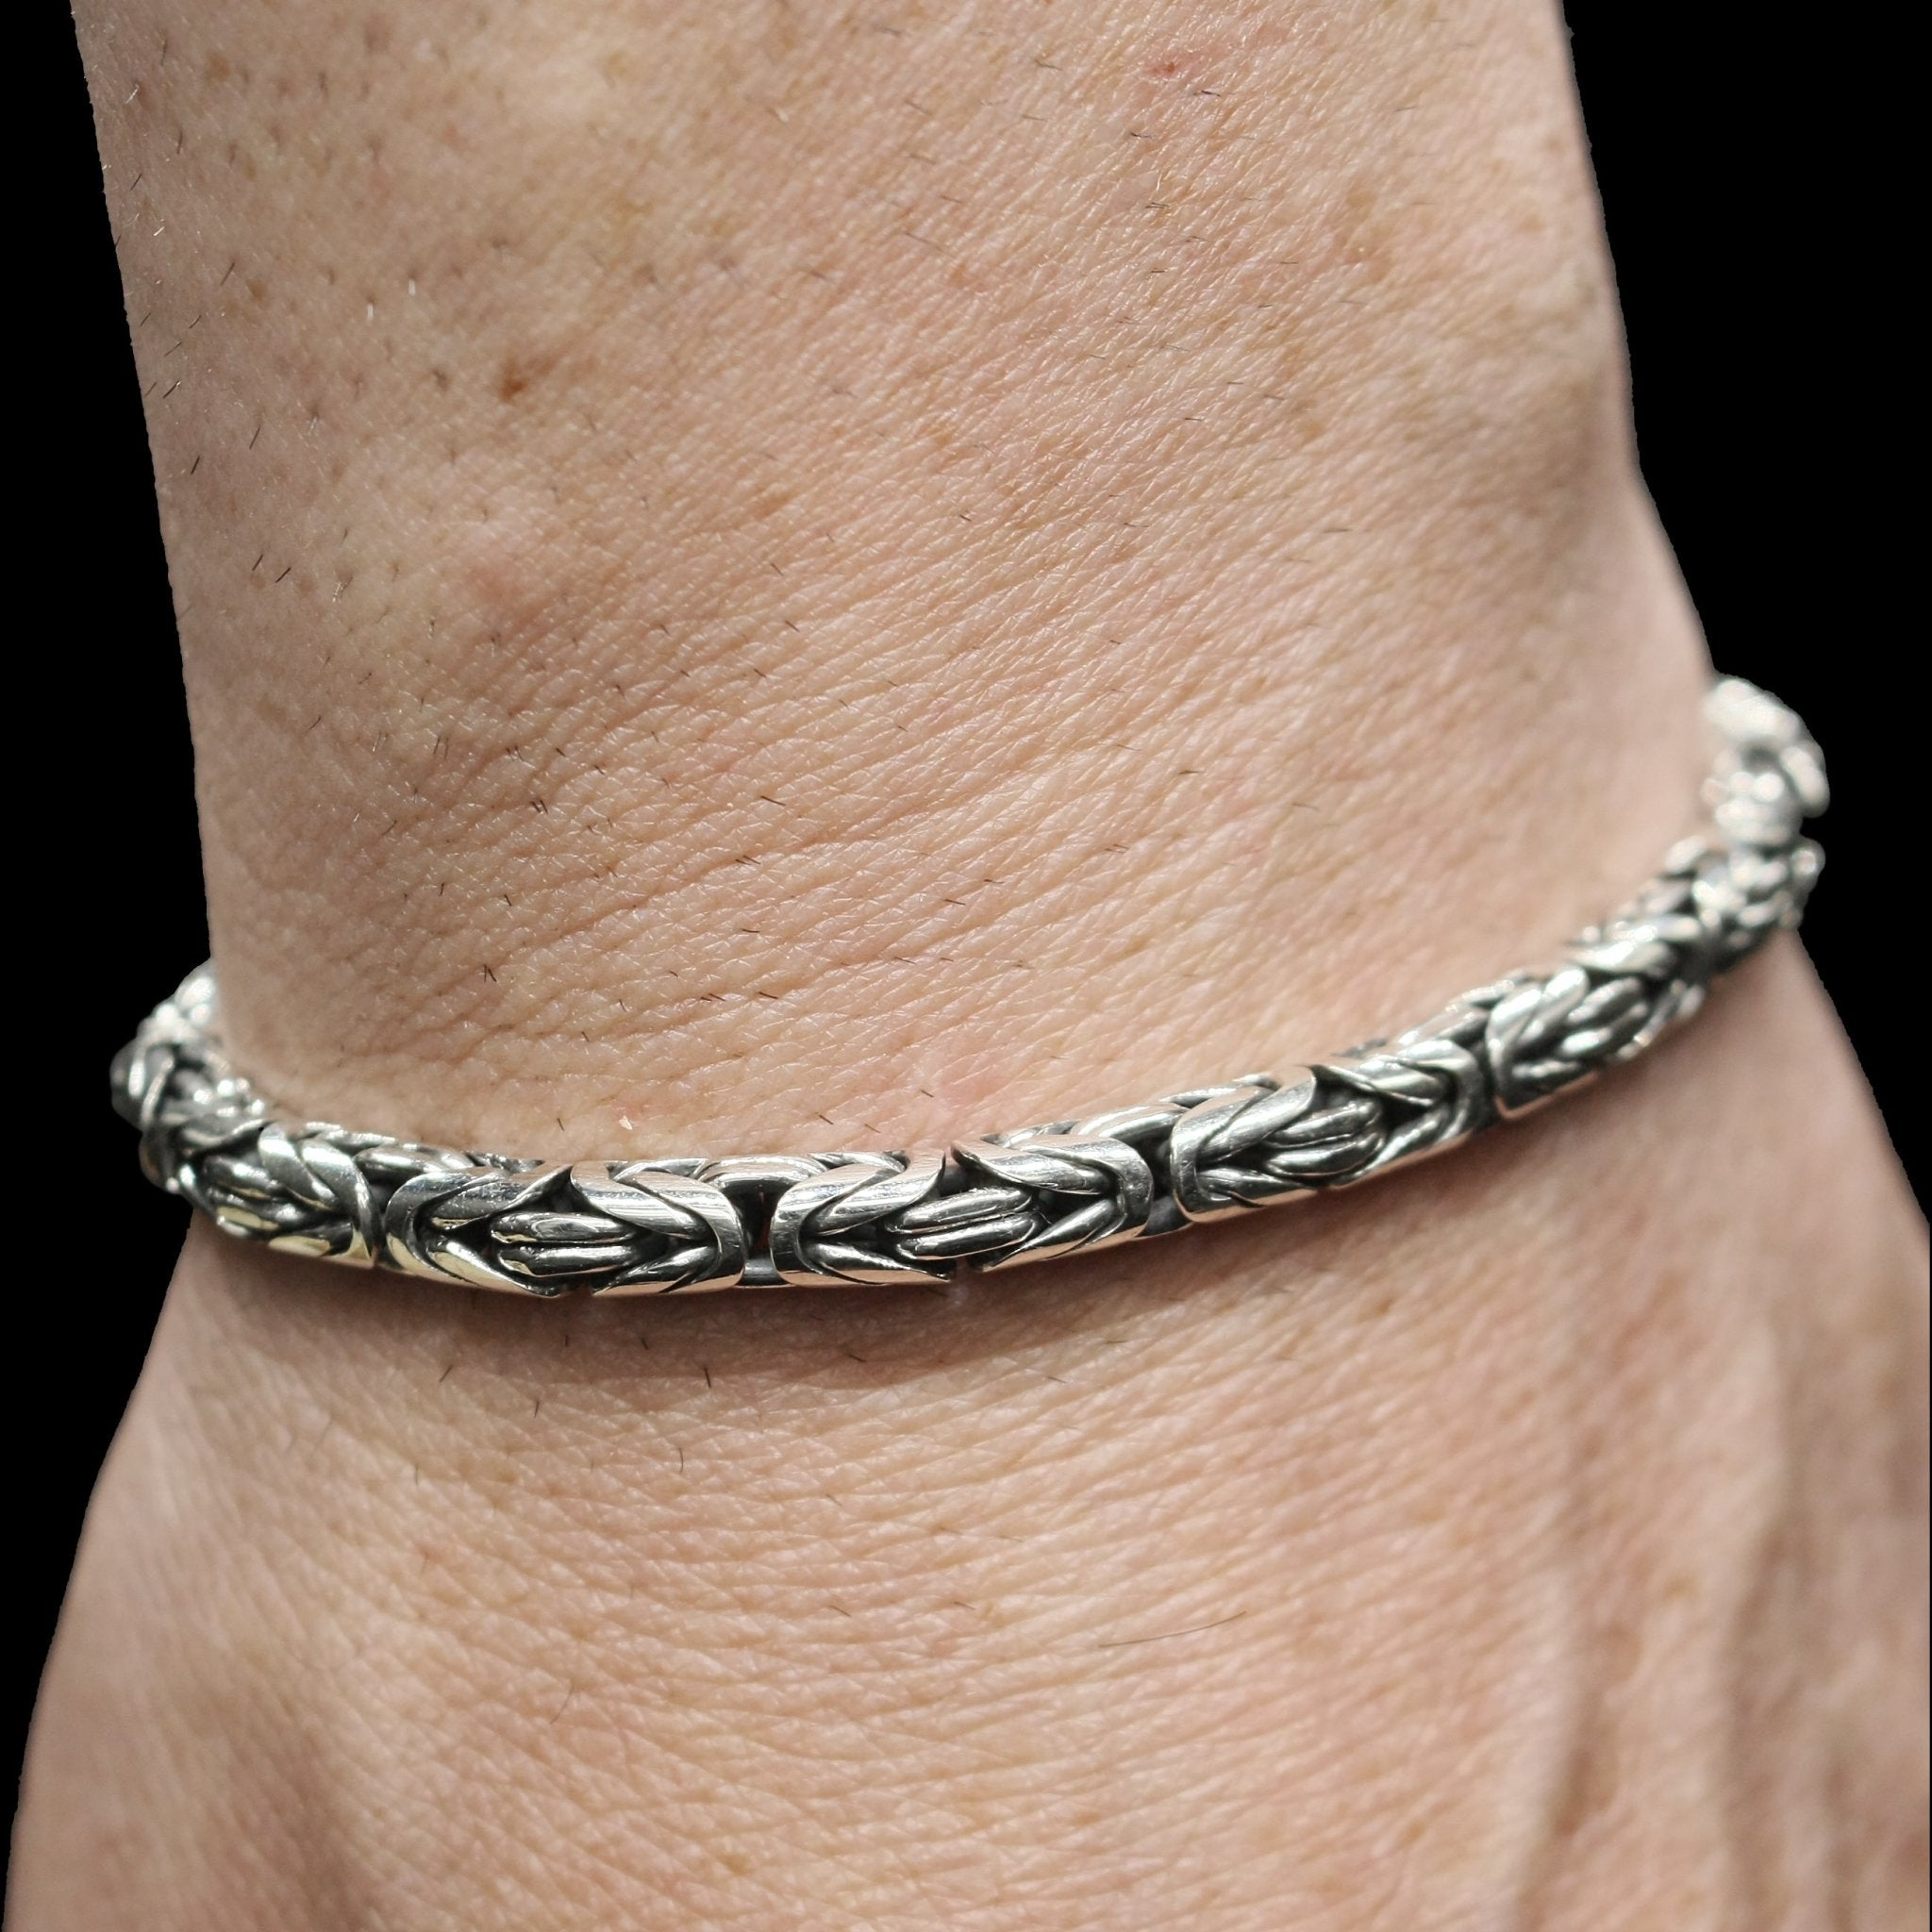 5mm Silver King Chain Viking Bracelet on Wrist